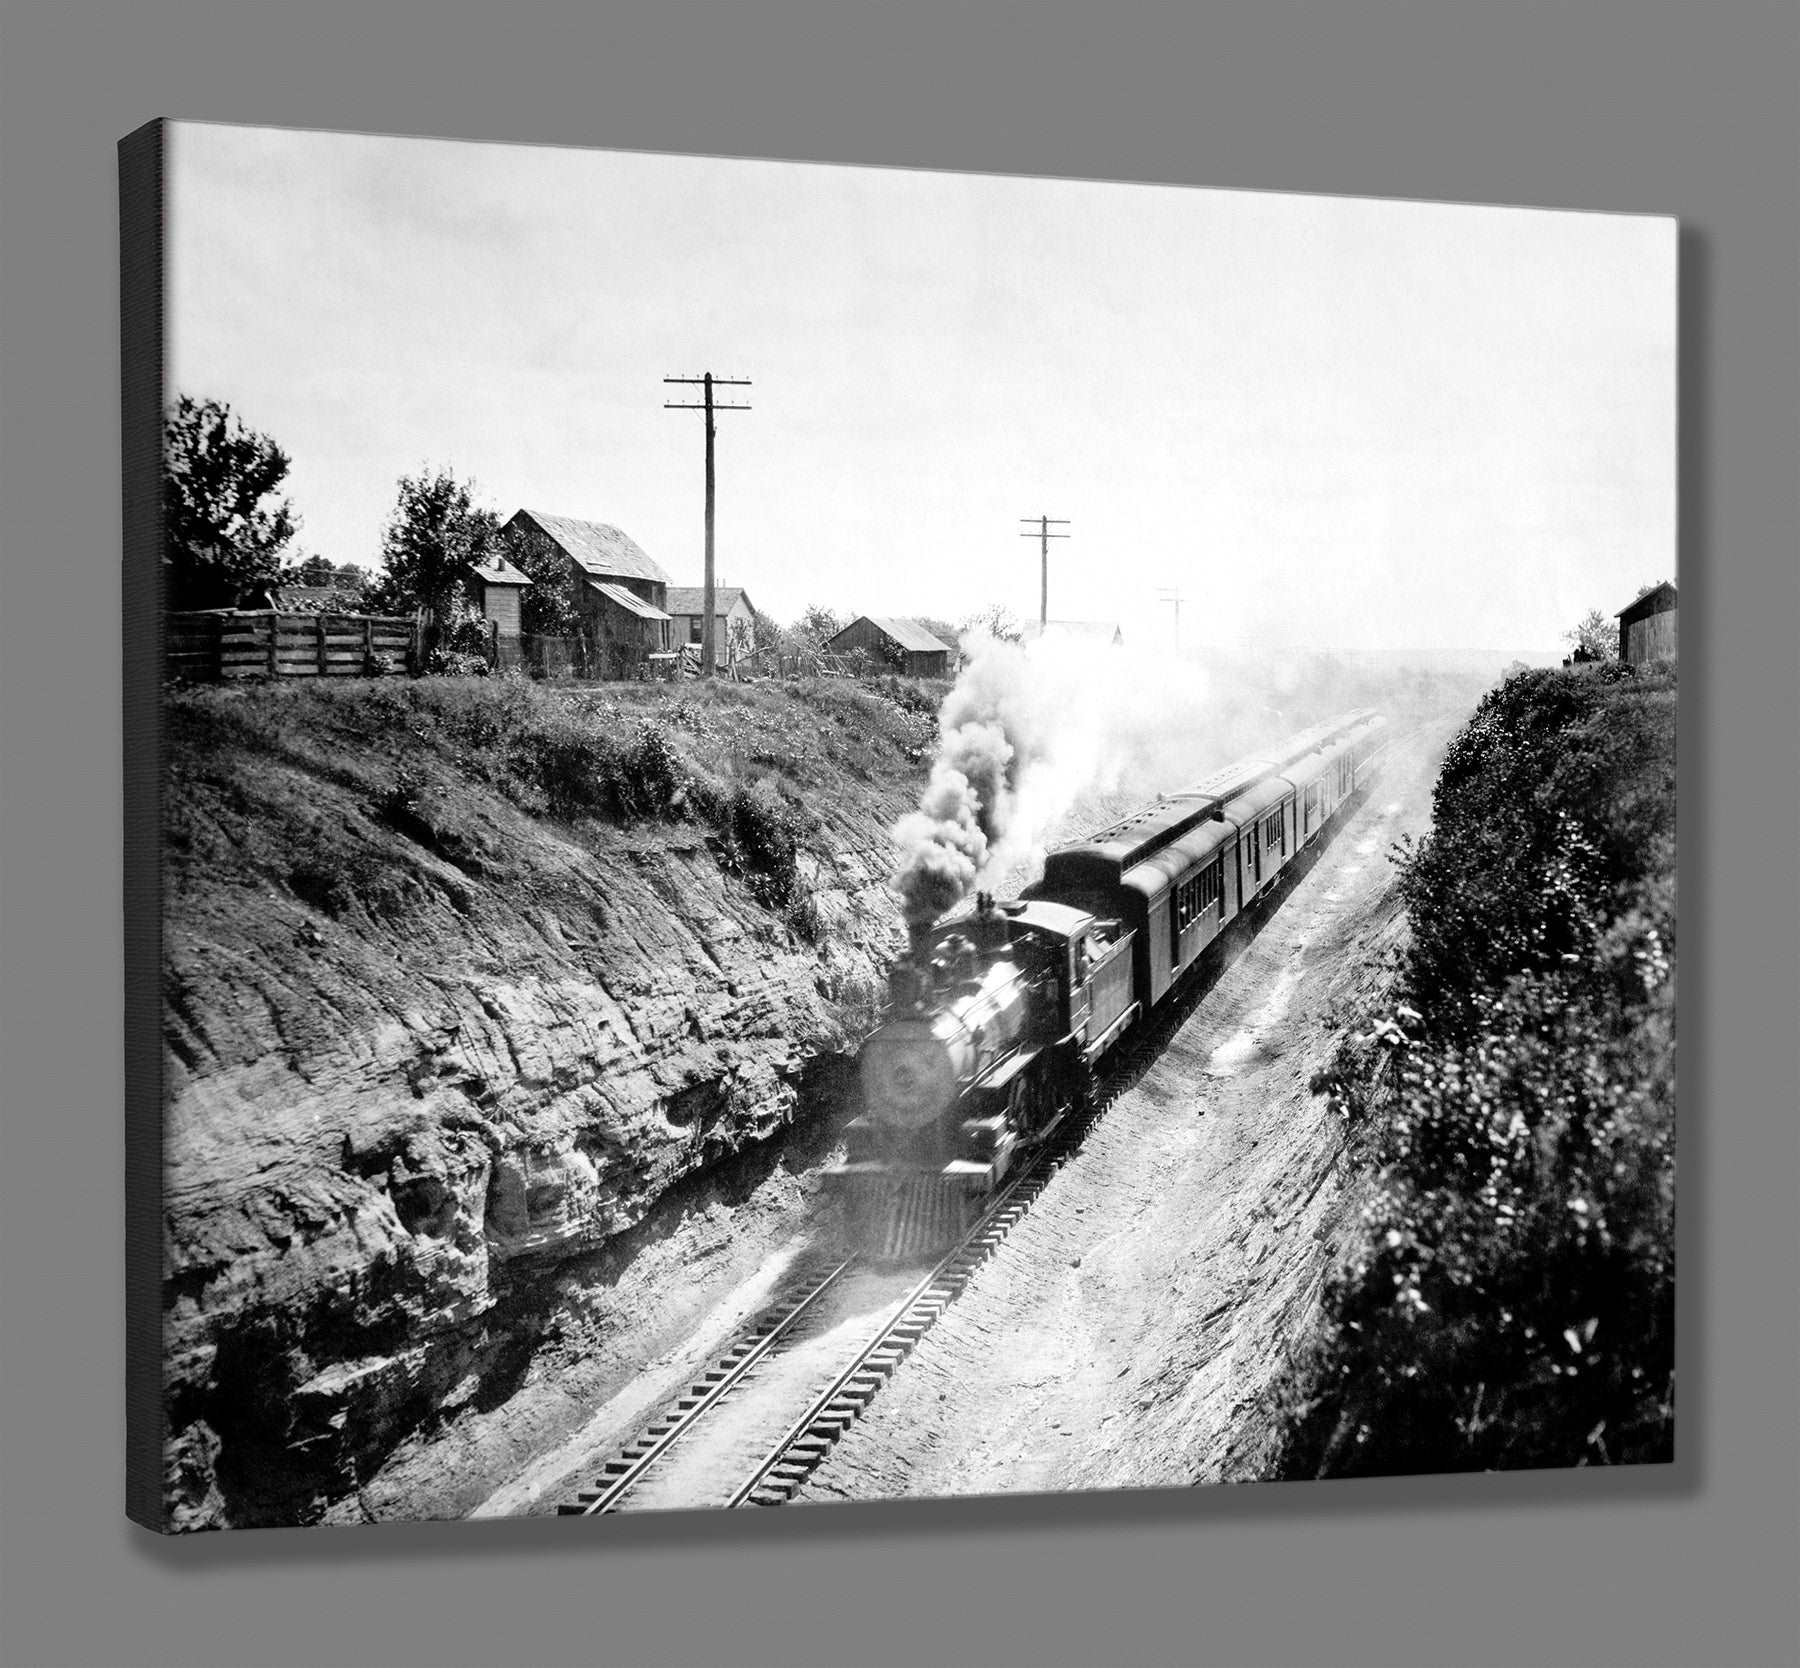 A canvas print of a vintage railroad train photograph